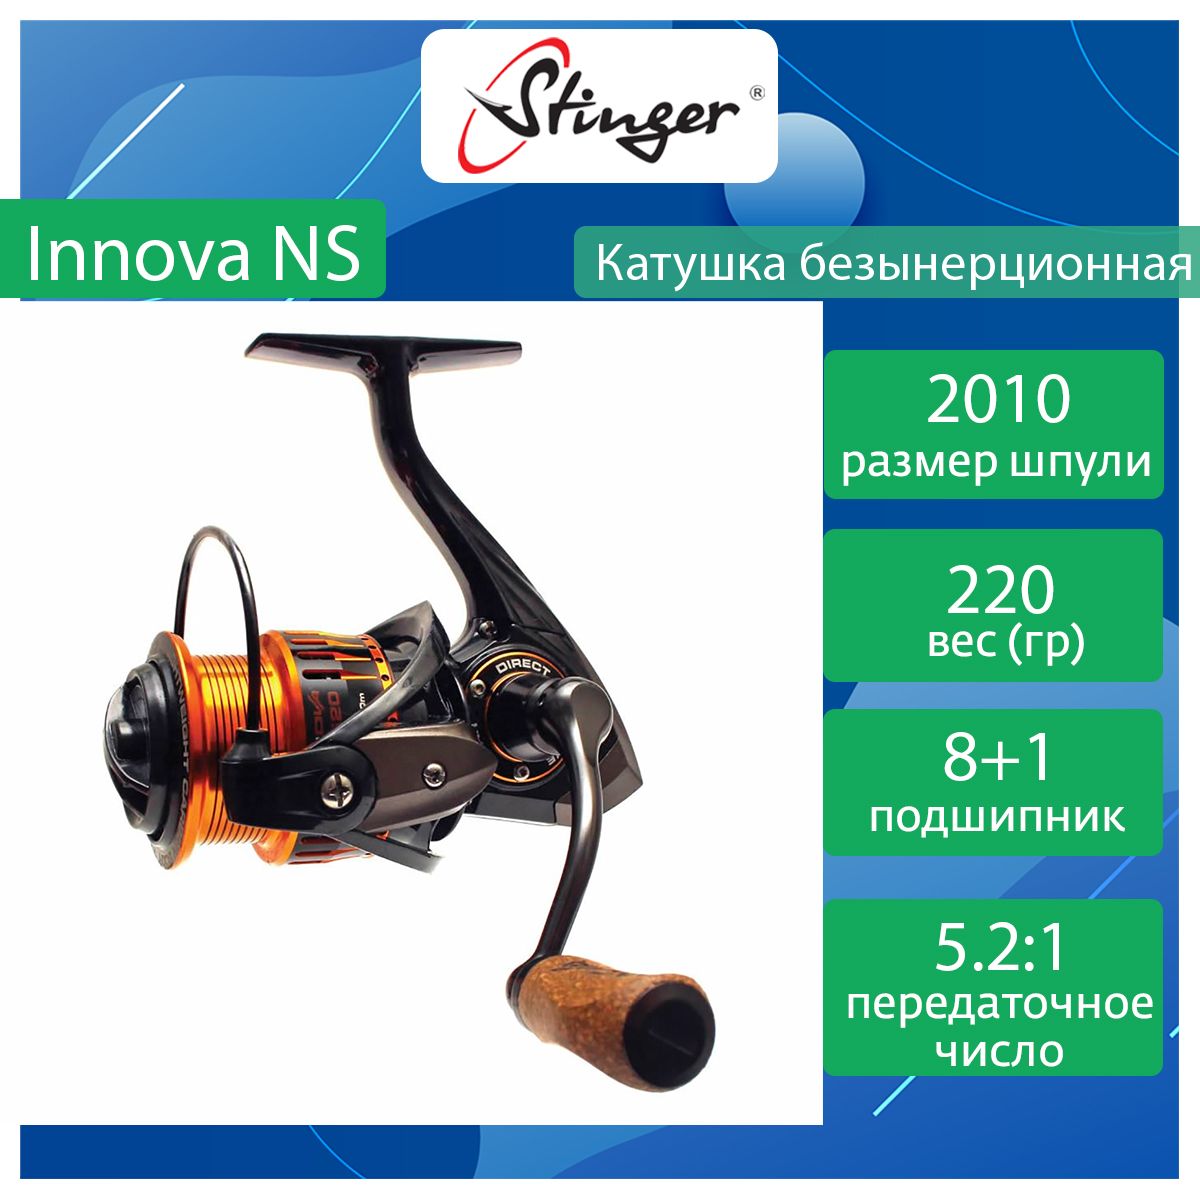 Катушка для рыбалки безынерционная Stinger Innova NS ef53273